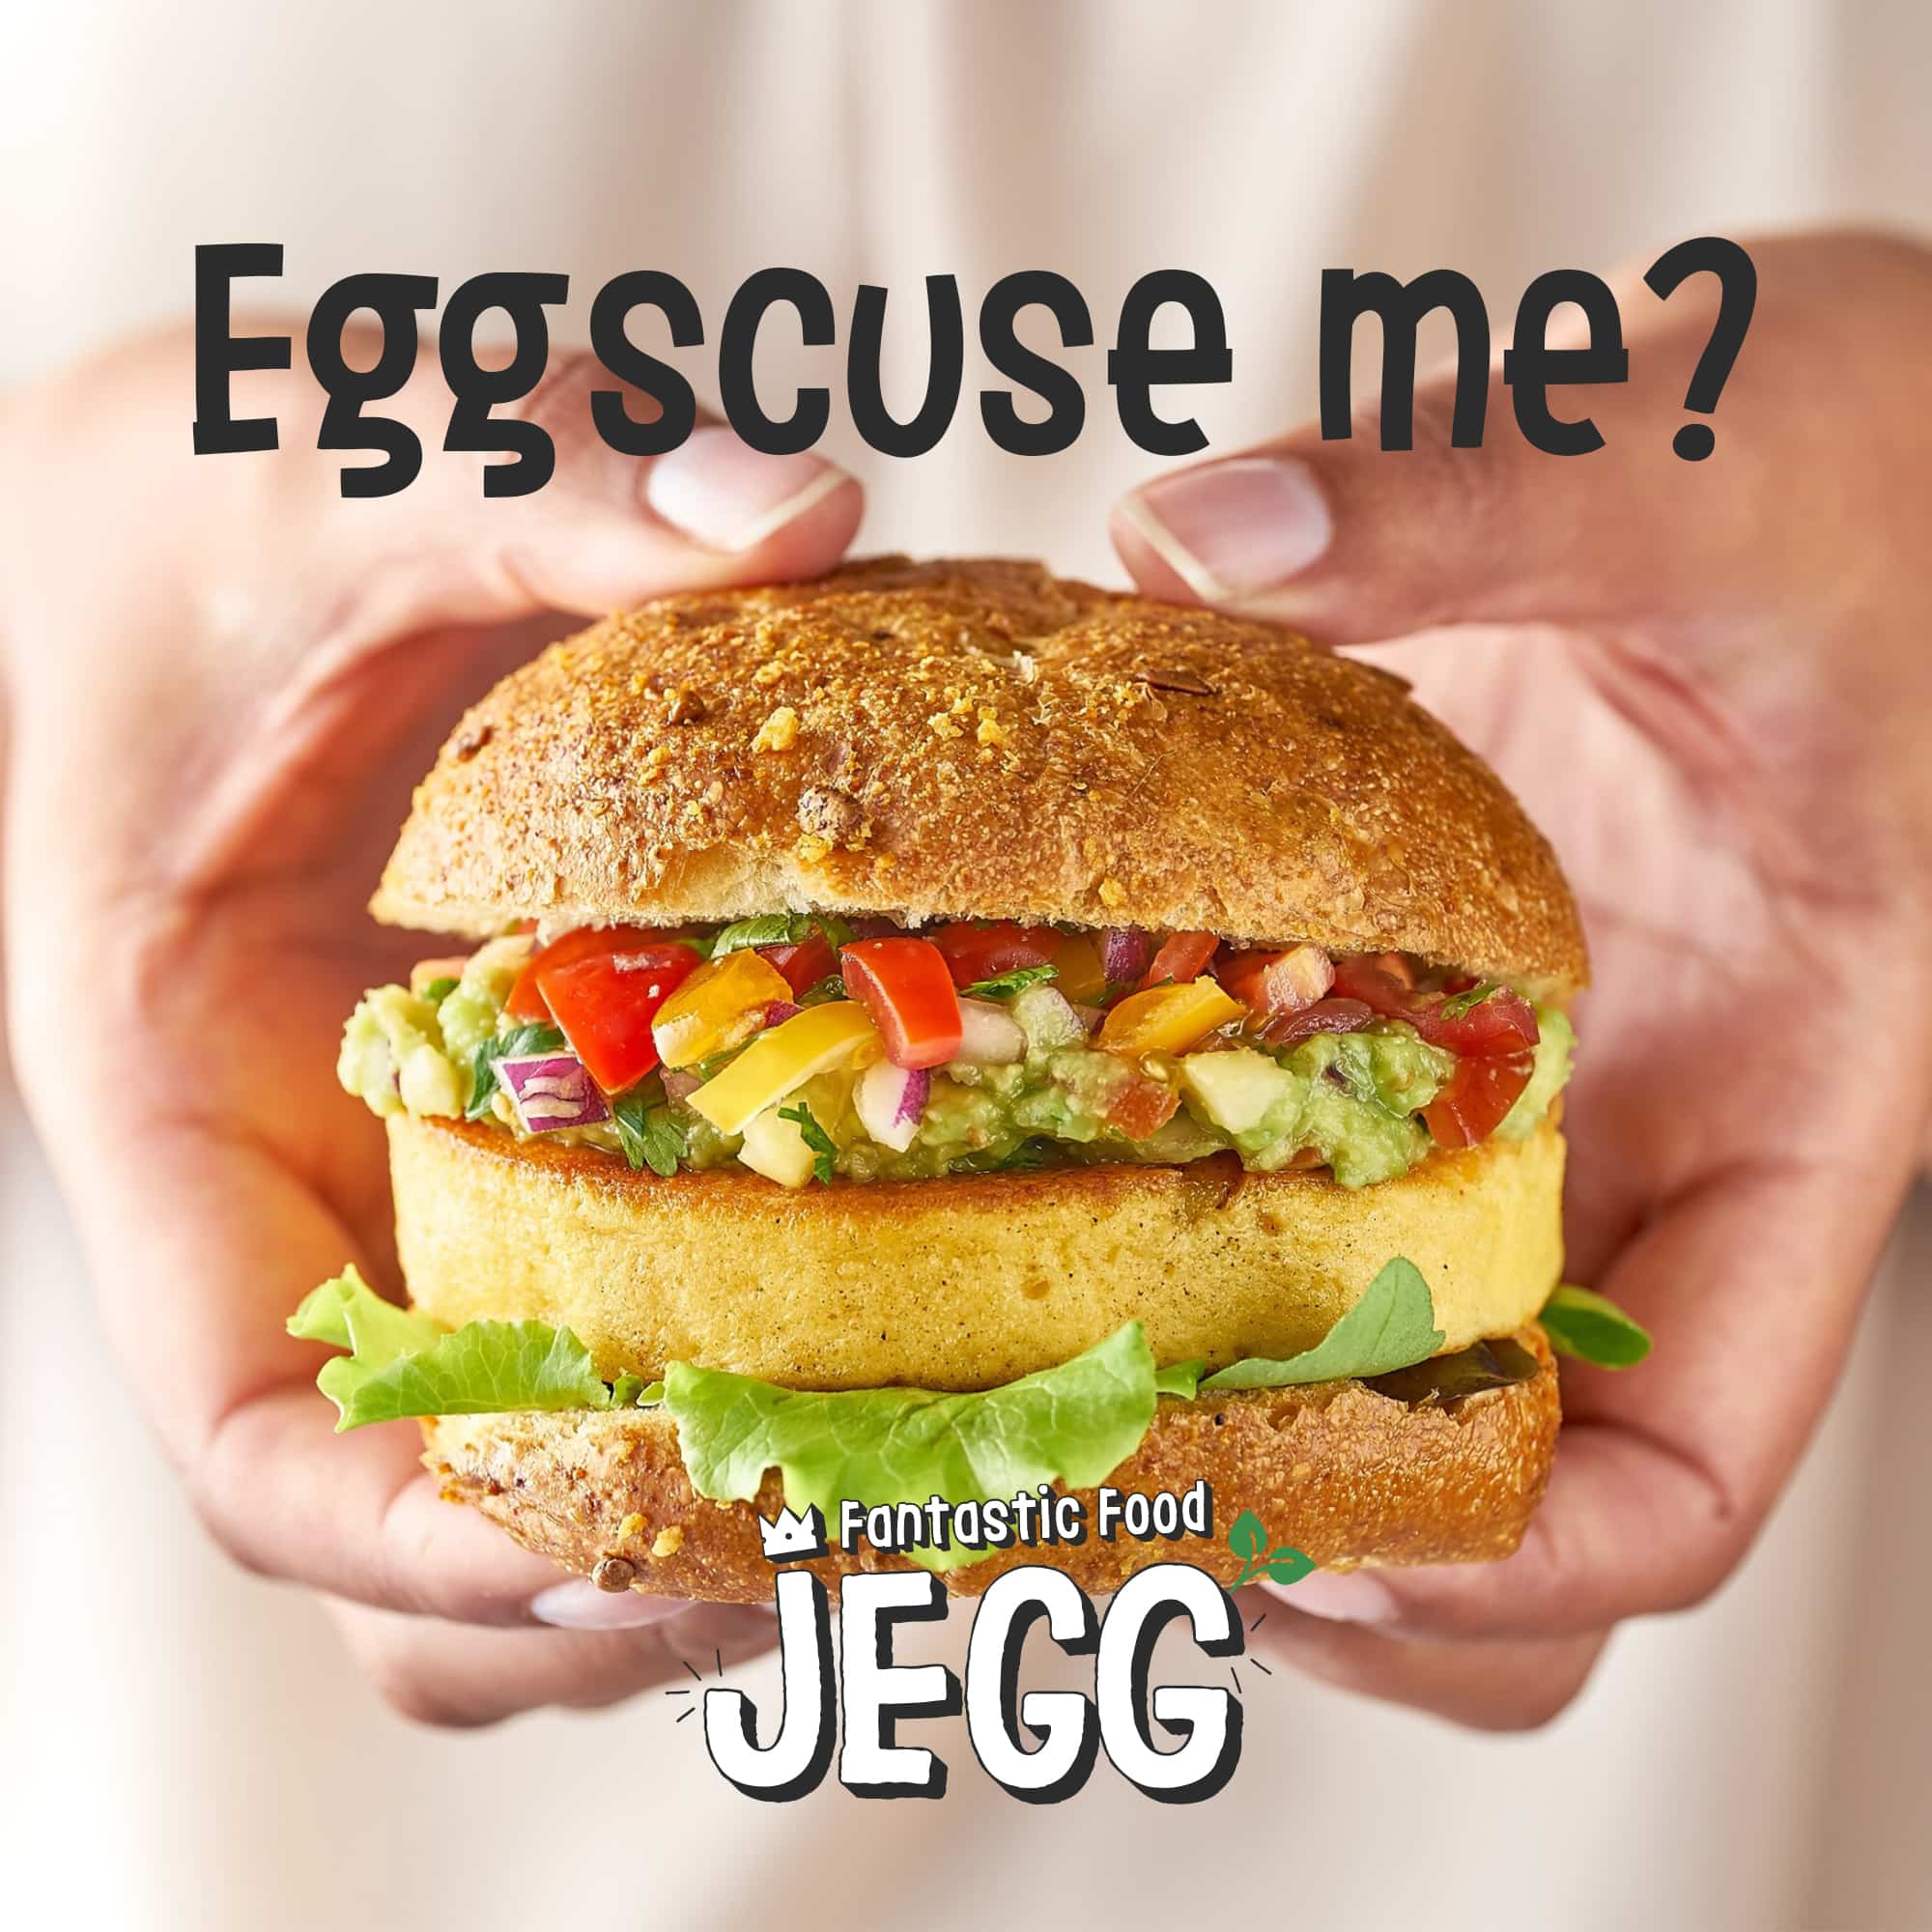 Eggscuse me - JEGG burger